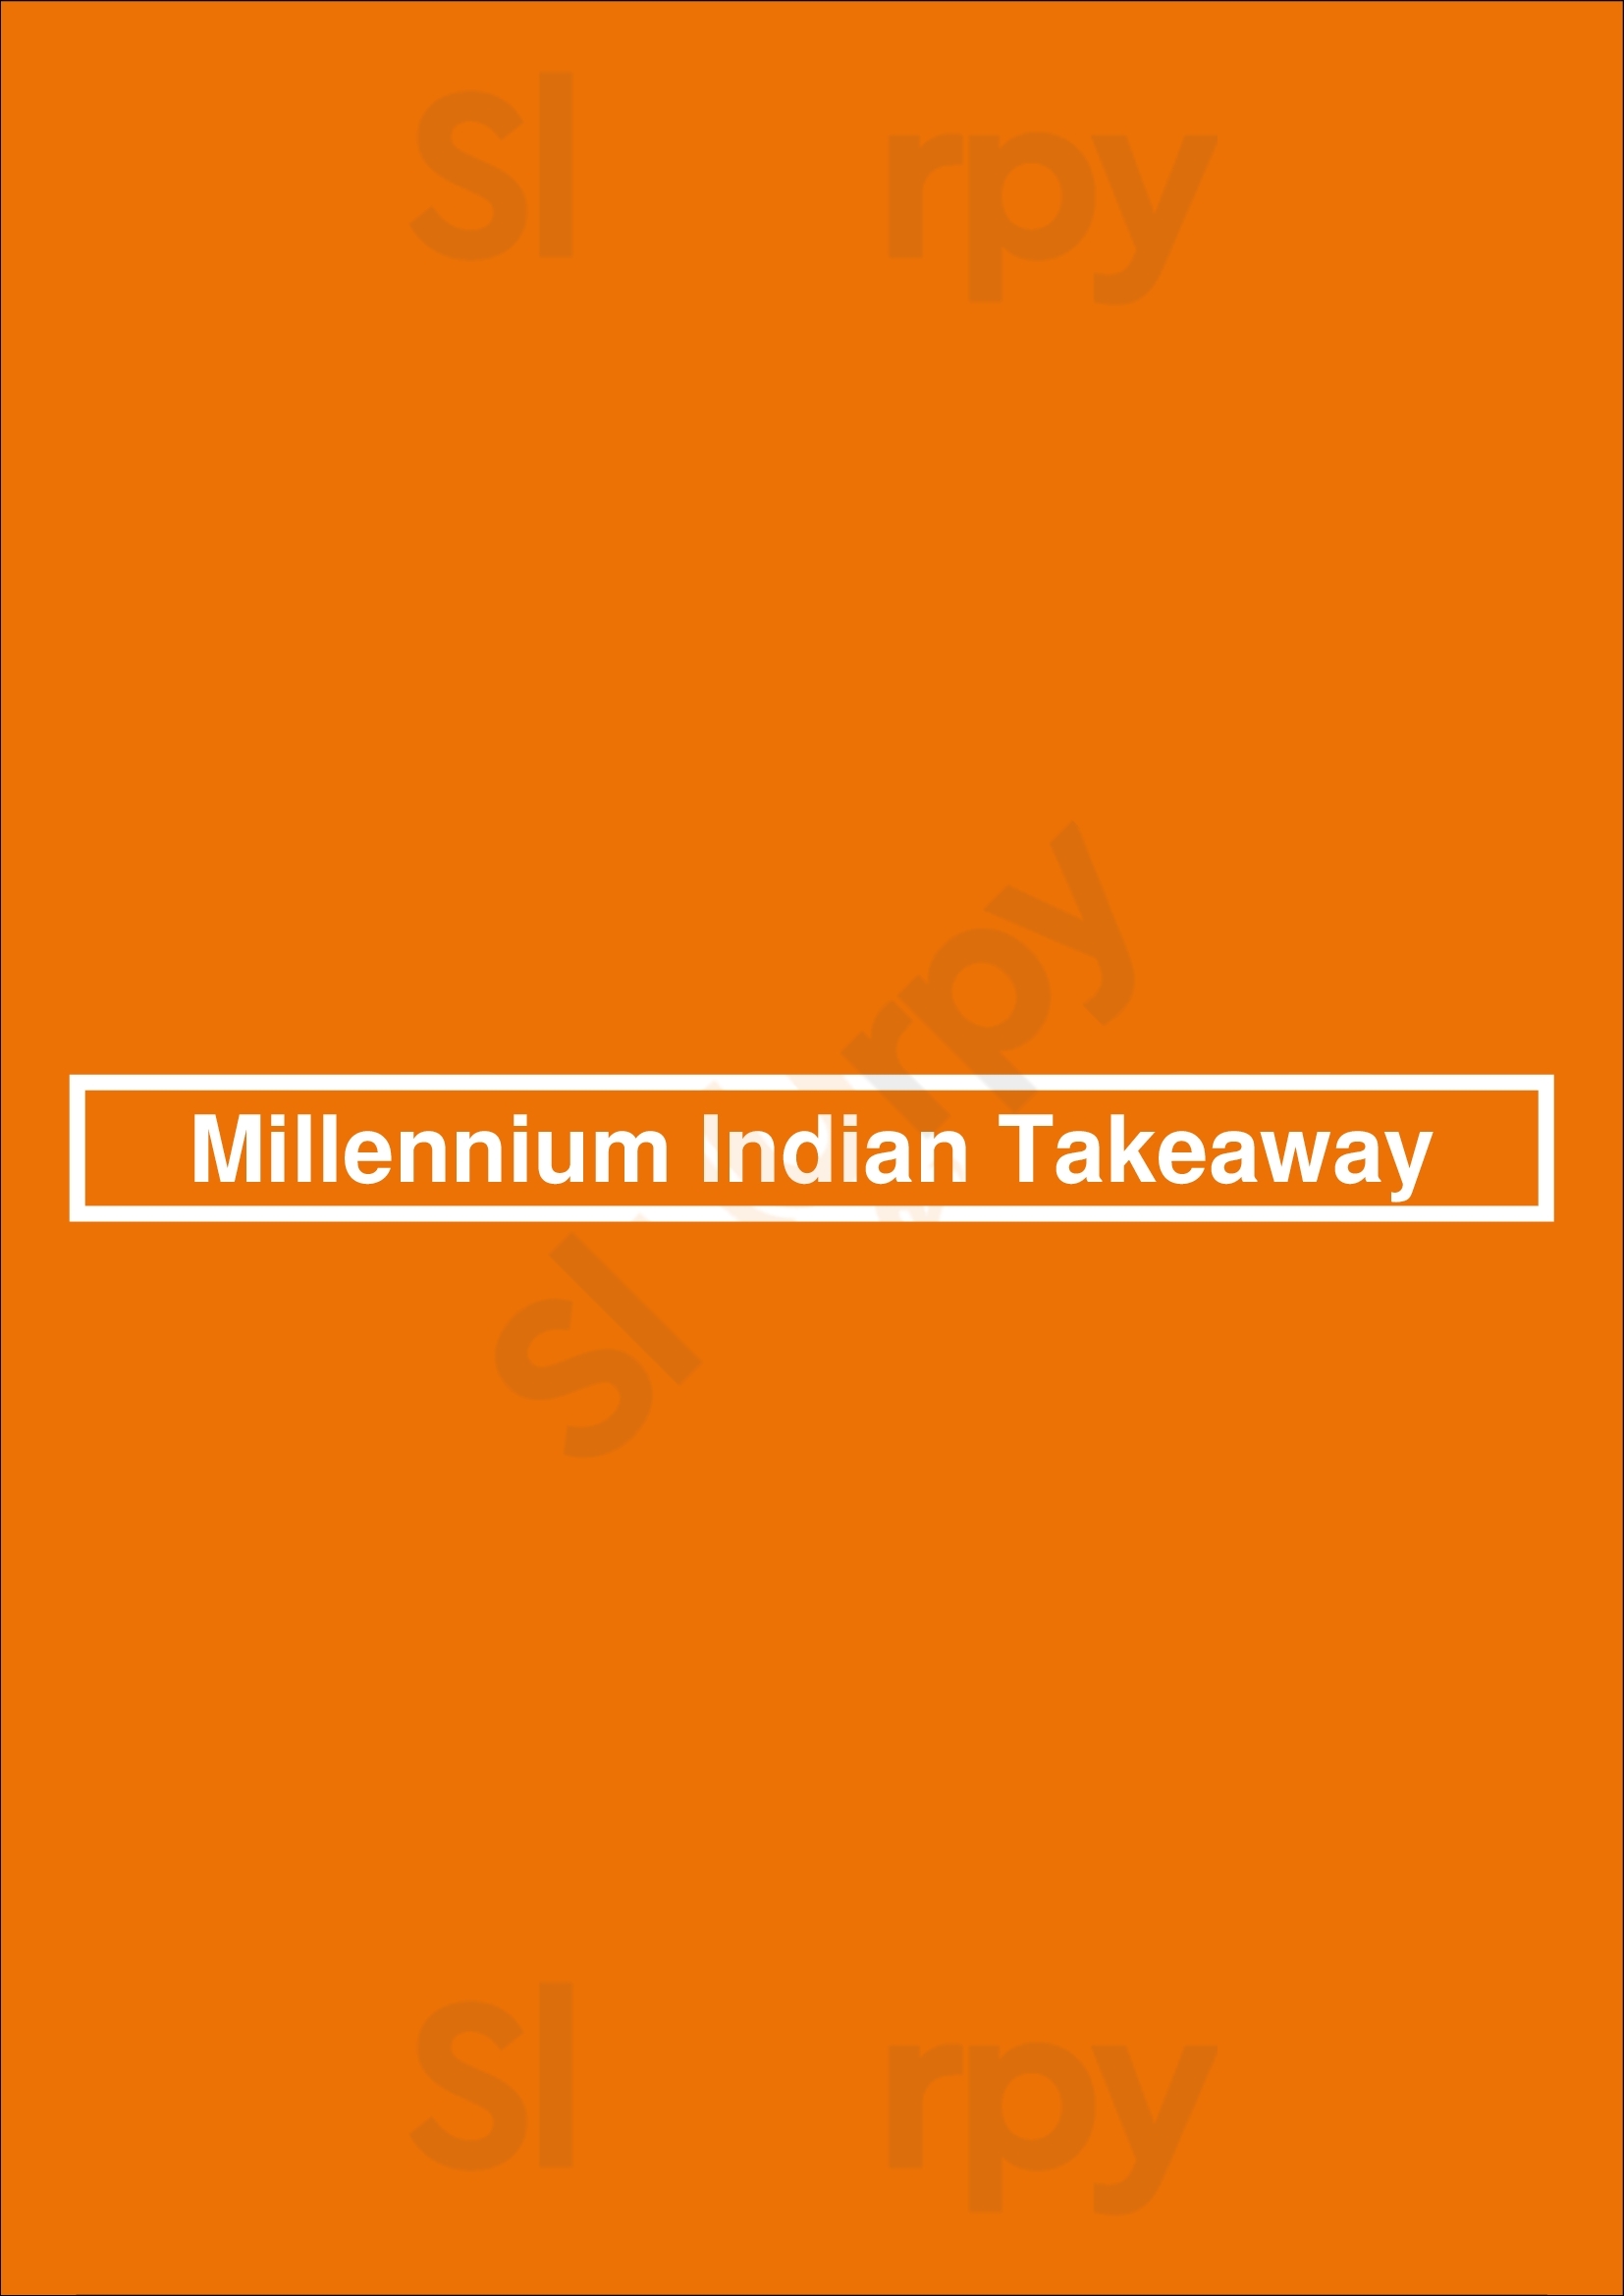 Millennium Indian Takeaway Widnes Menu - 1